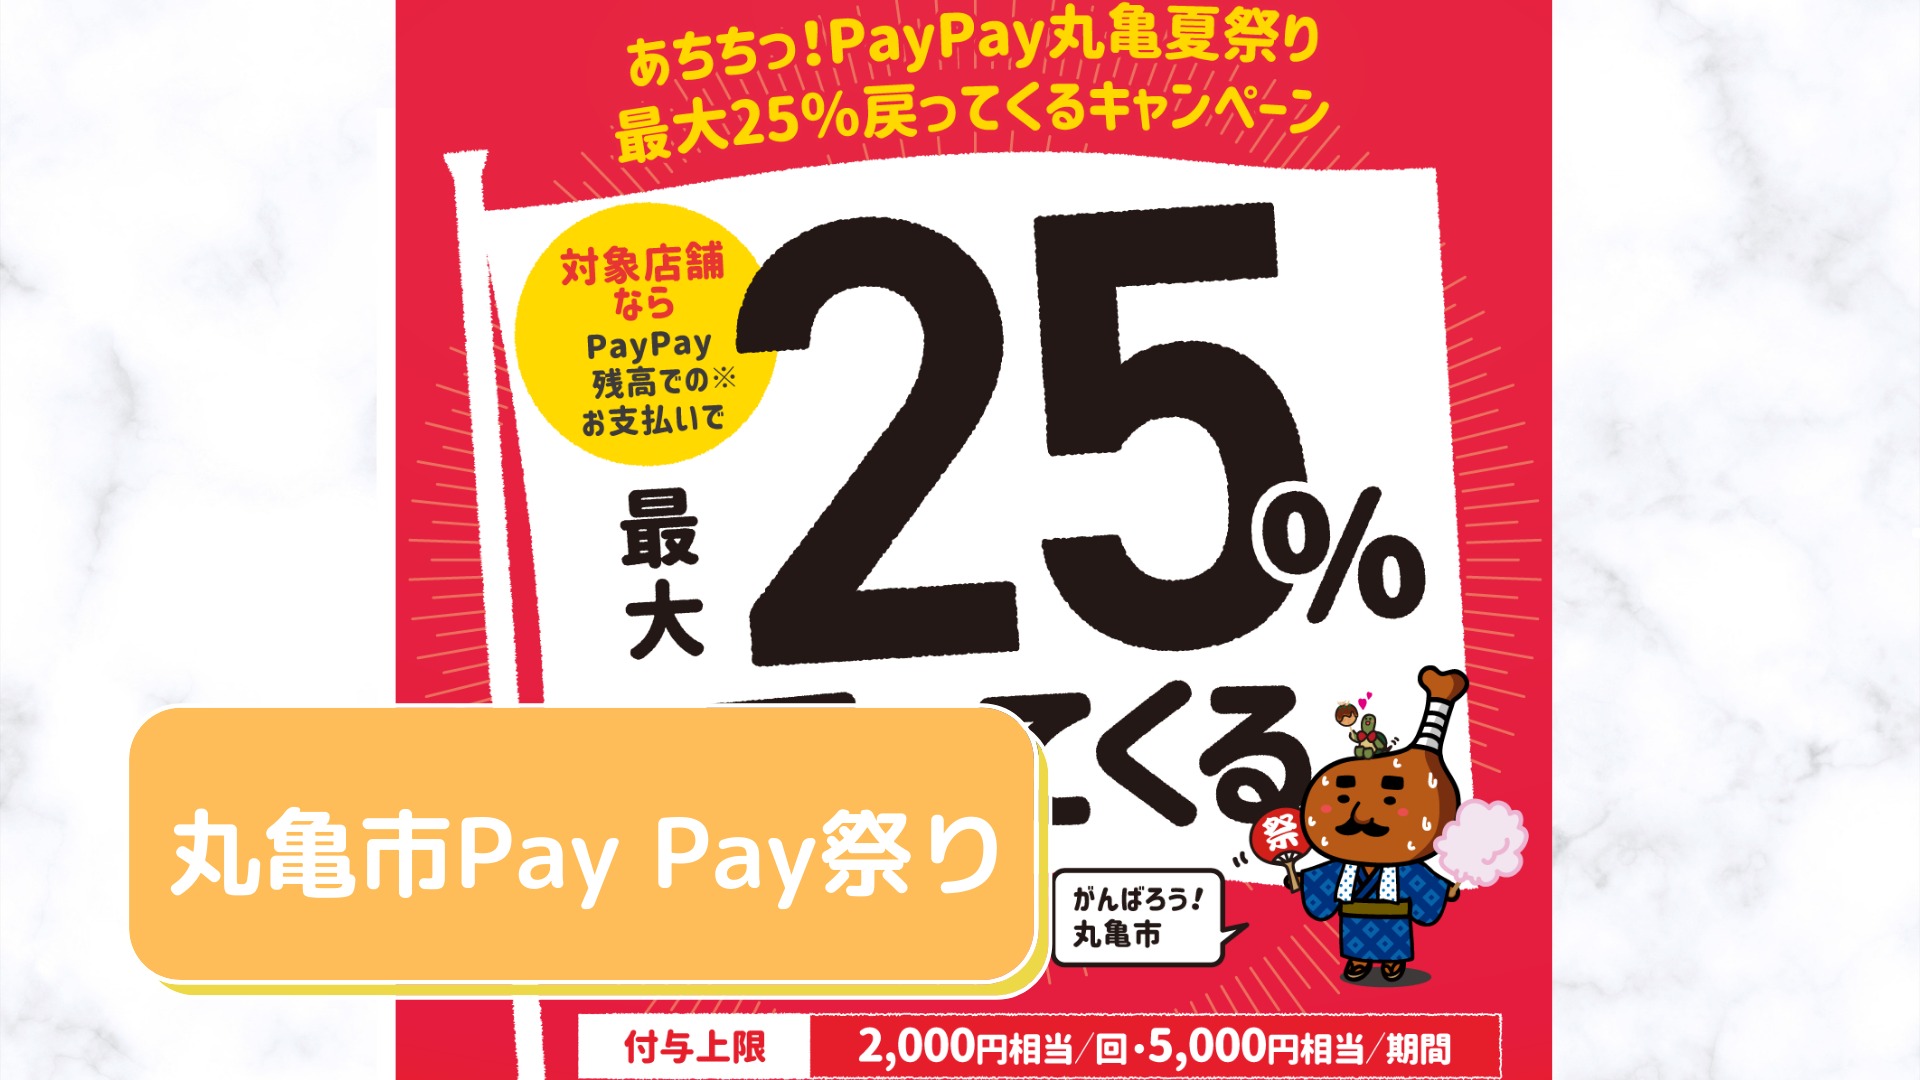 丸亀市Pay Pay祭り